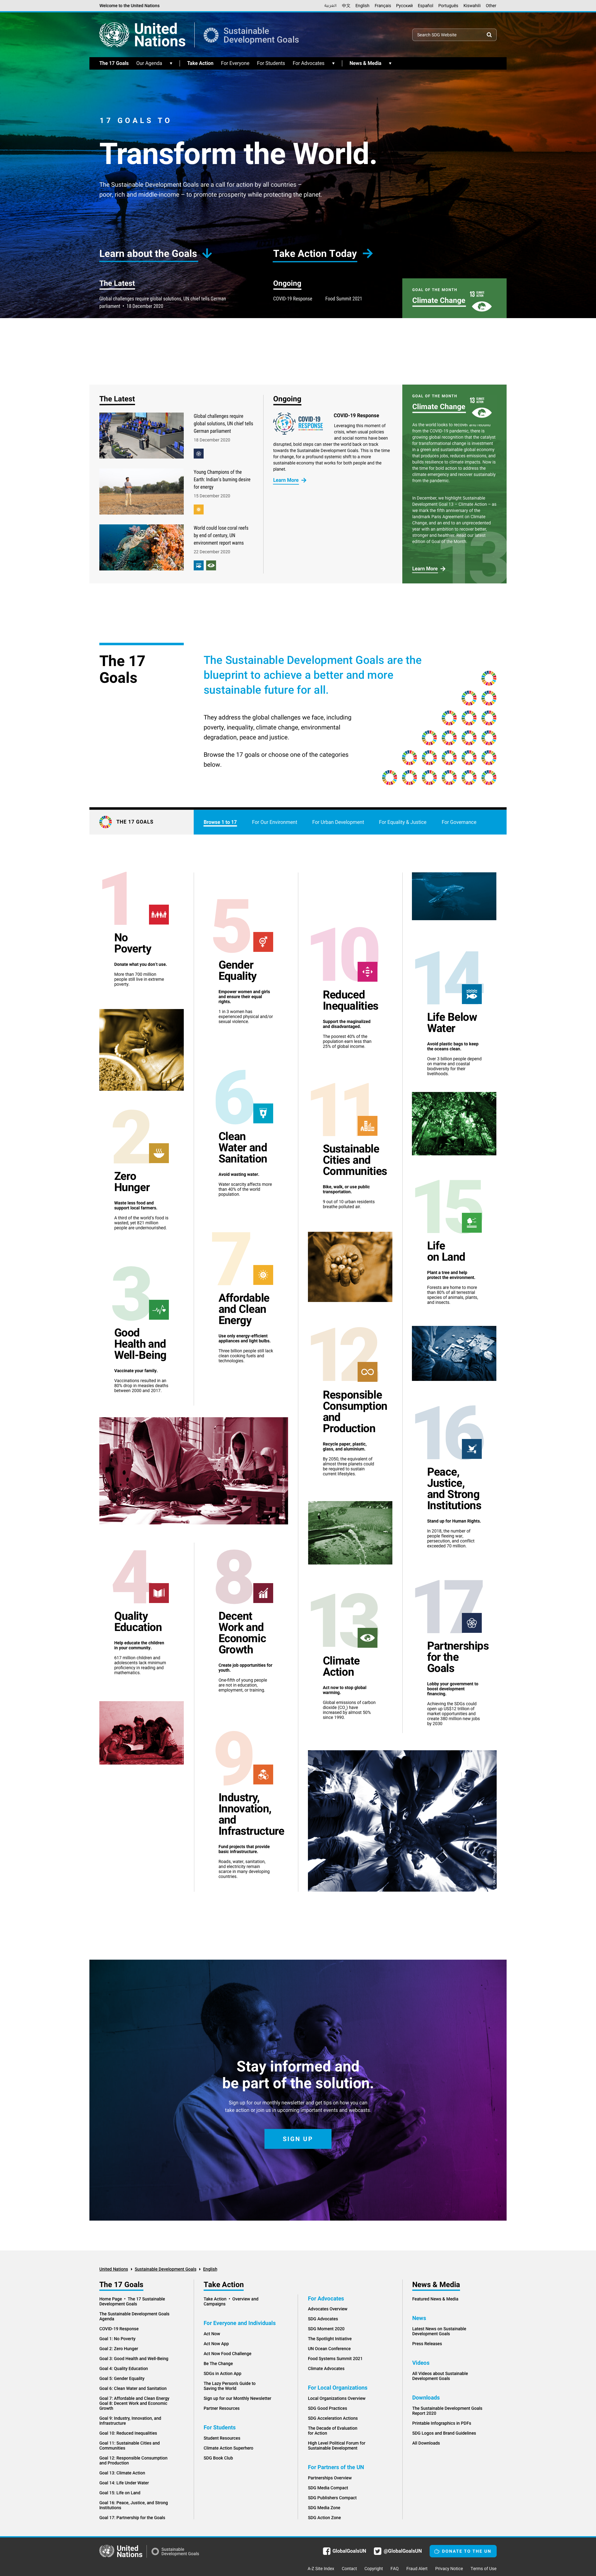 Sustainable Development homepage layout